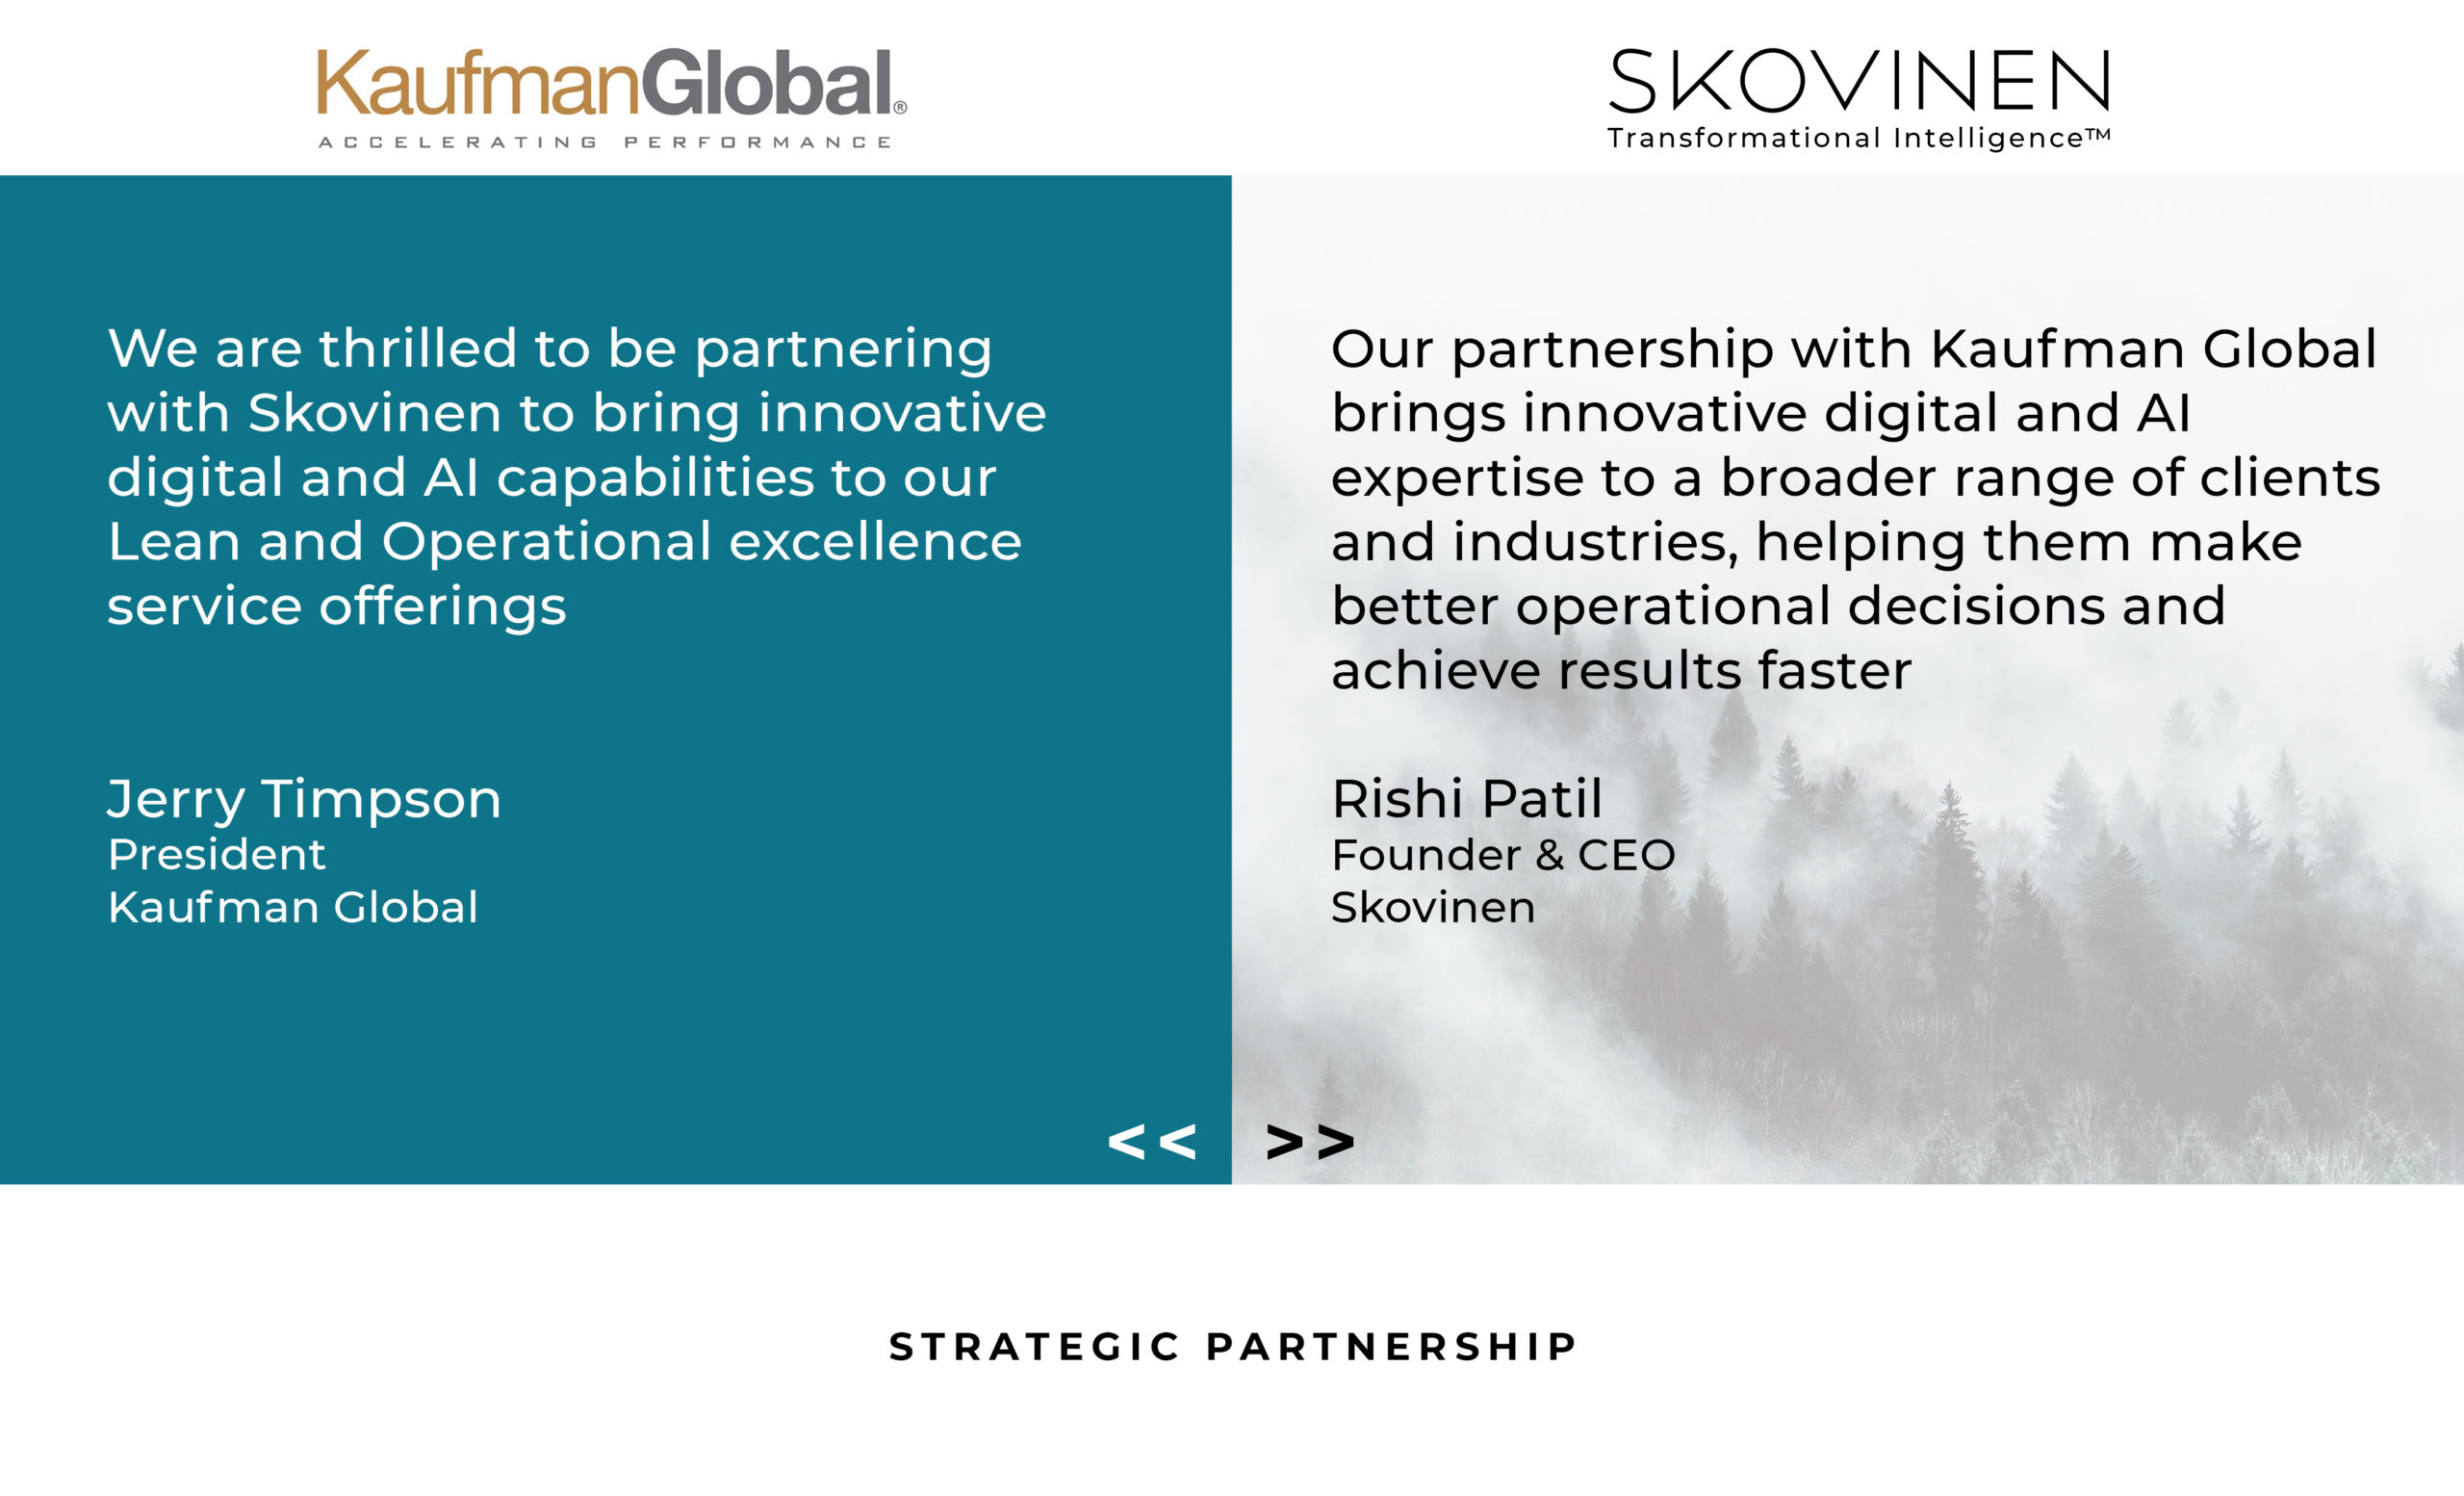 leadership quotes regarding strategic partnership between Kaufman Global and Skovinen